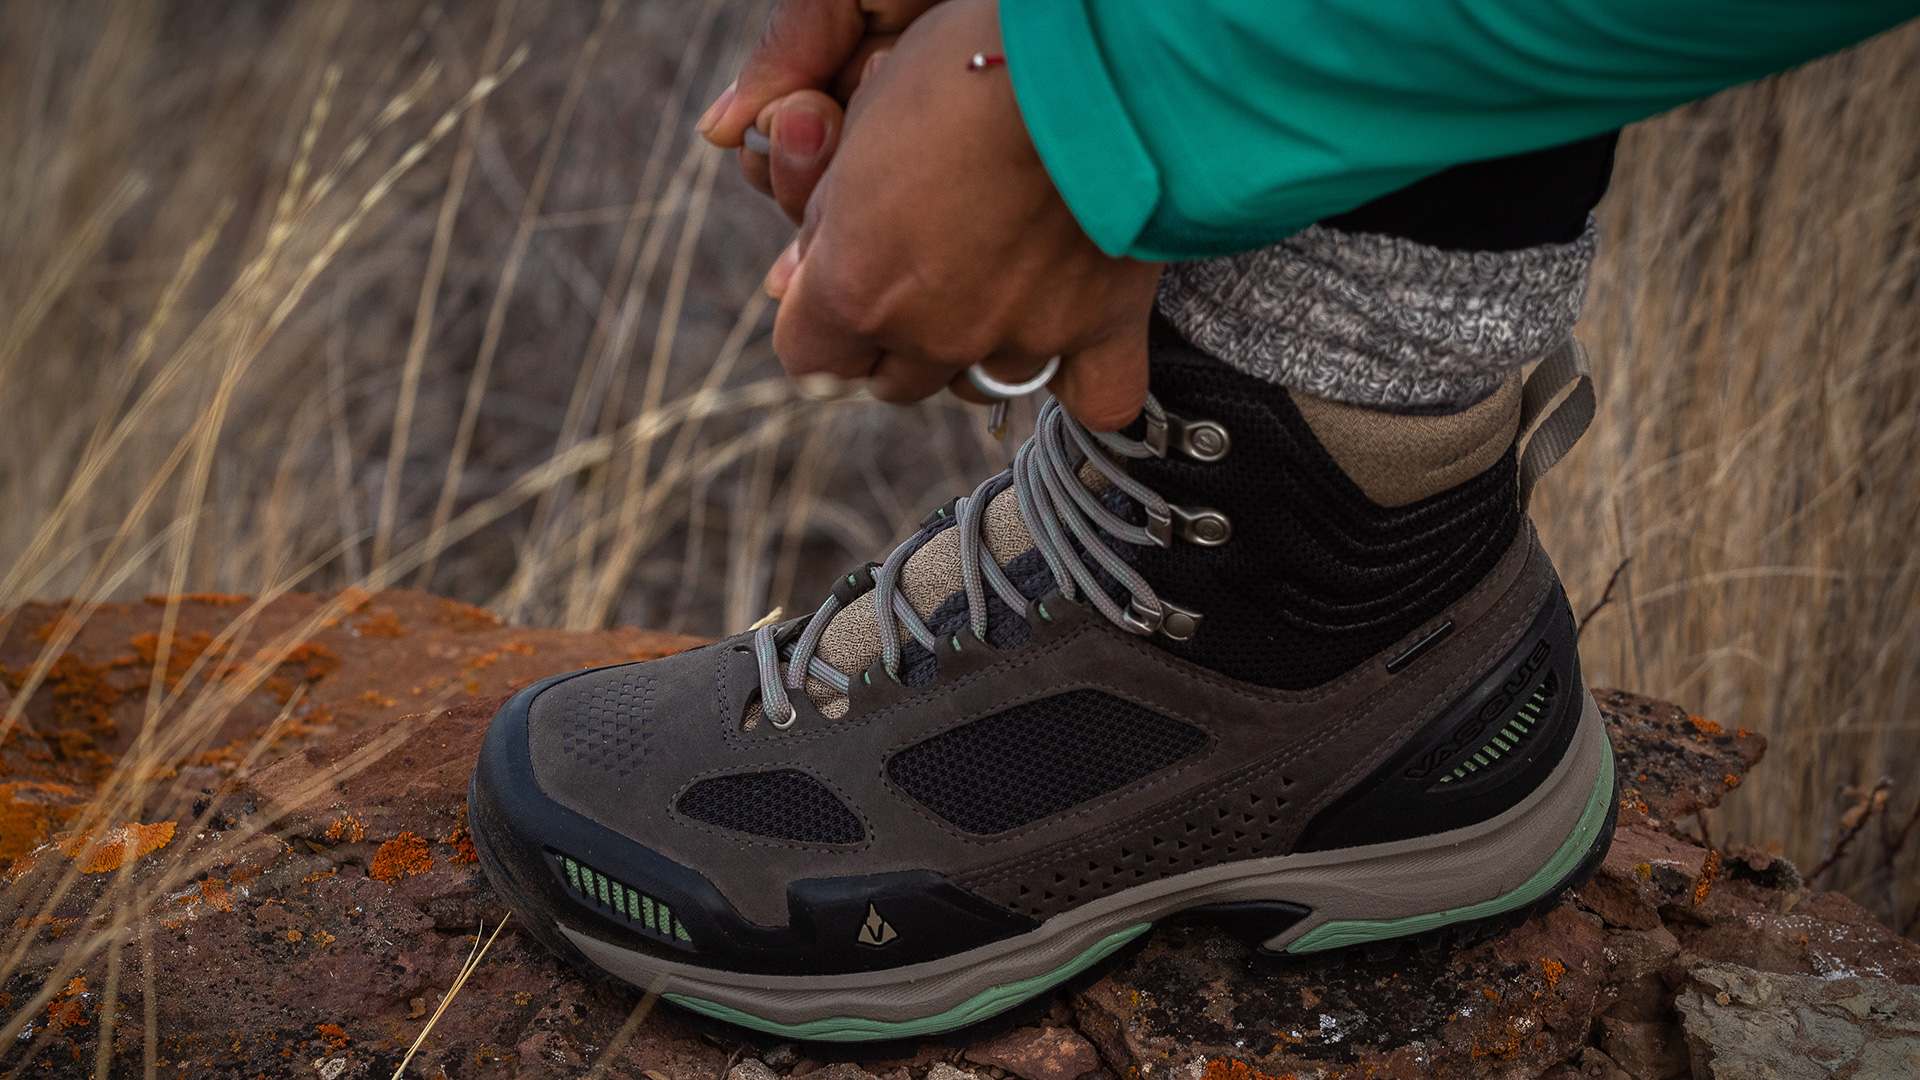 Wolverine Womens Fletcher Mid Hiking Boots Tan Shoes Waterproof W10606 10M New